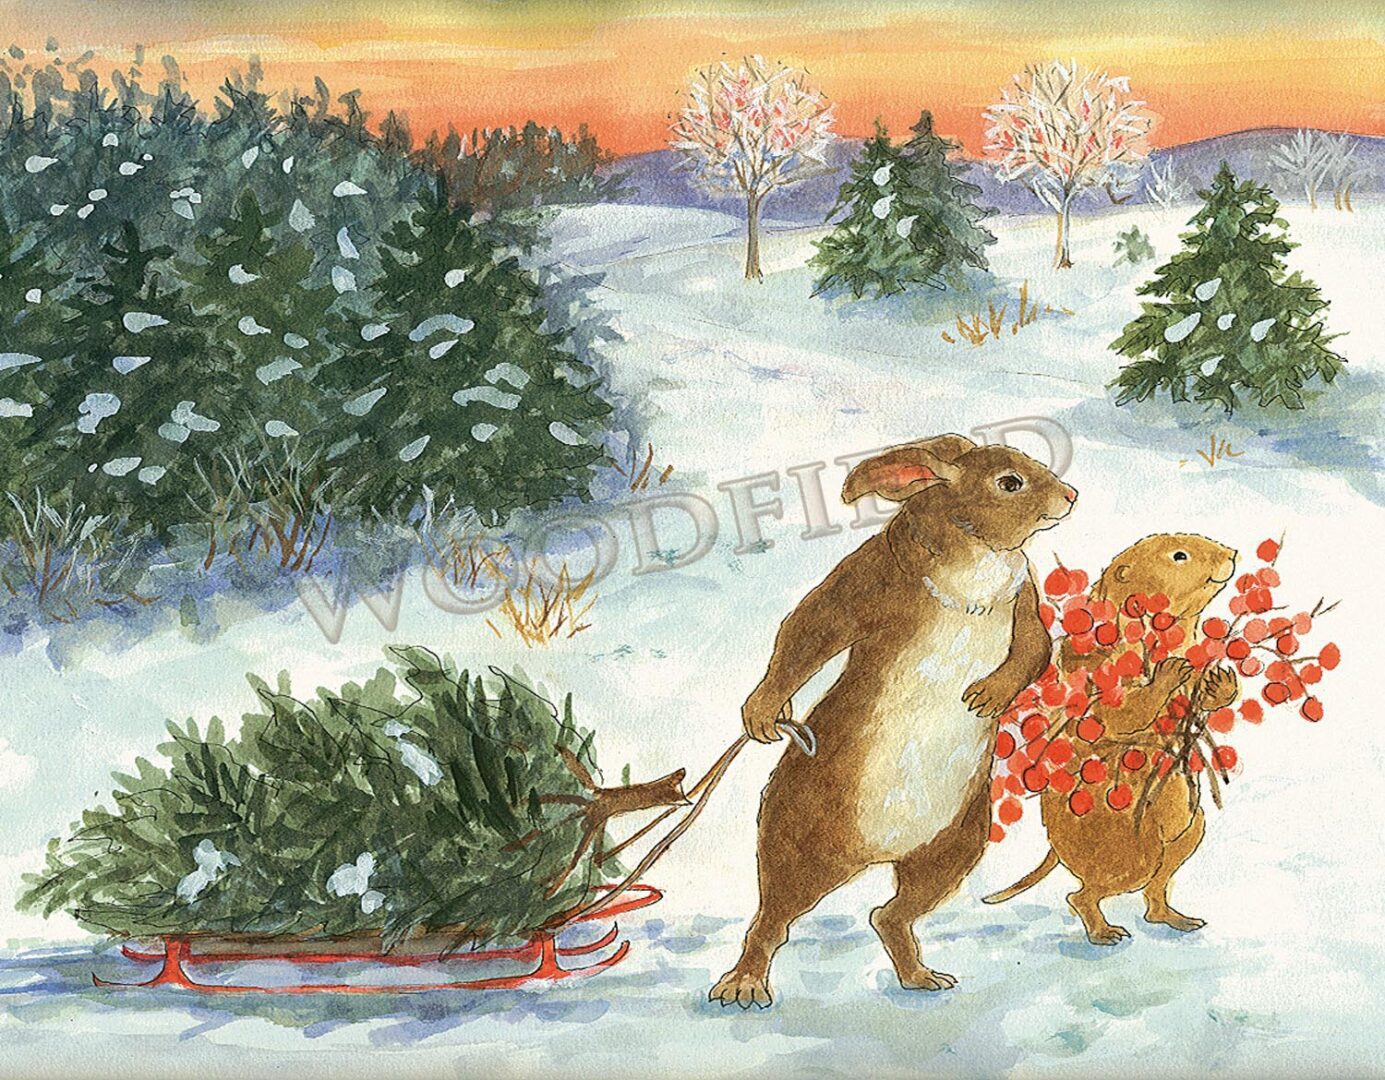 Two rabbits grabbing a pine tree